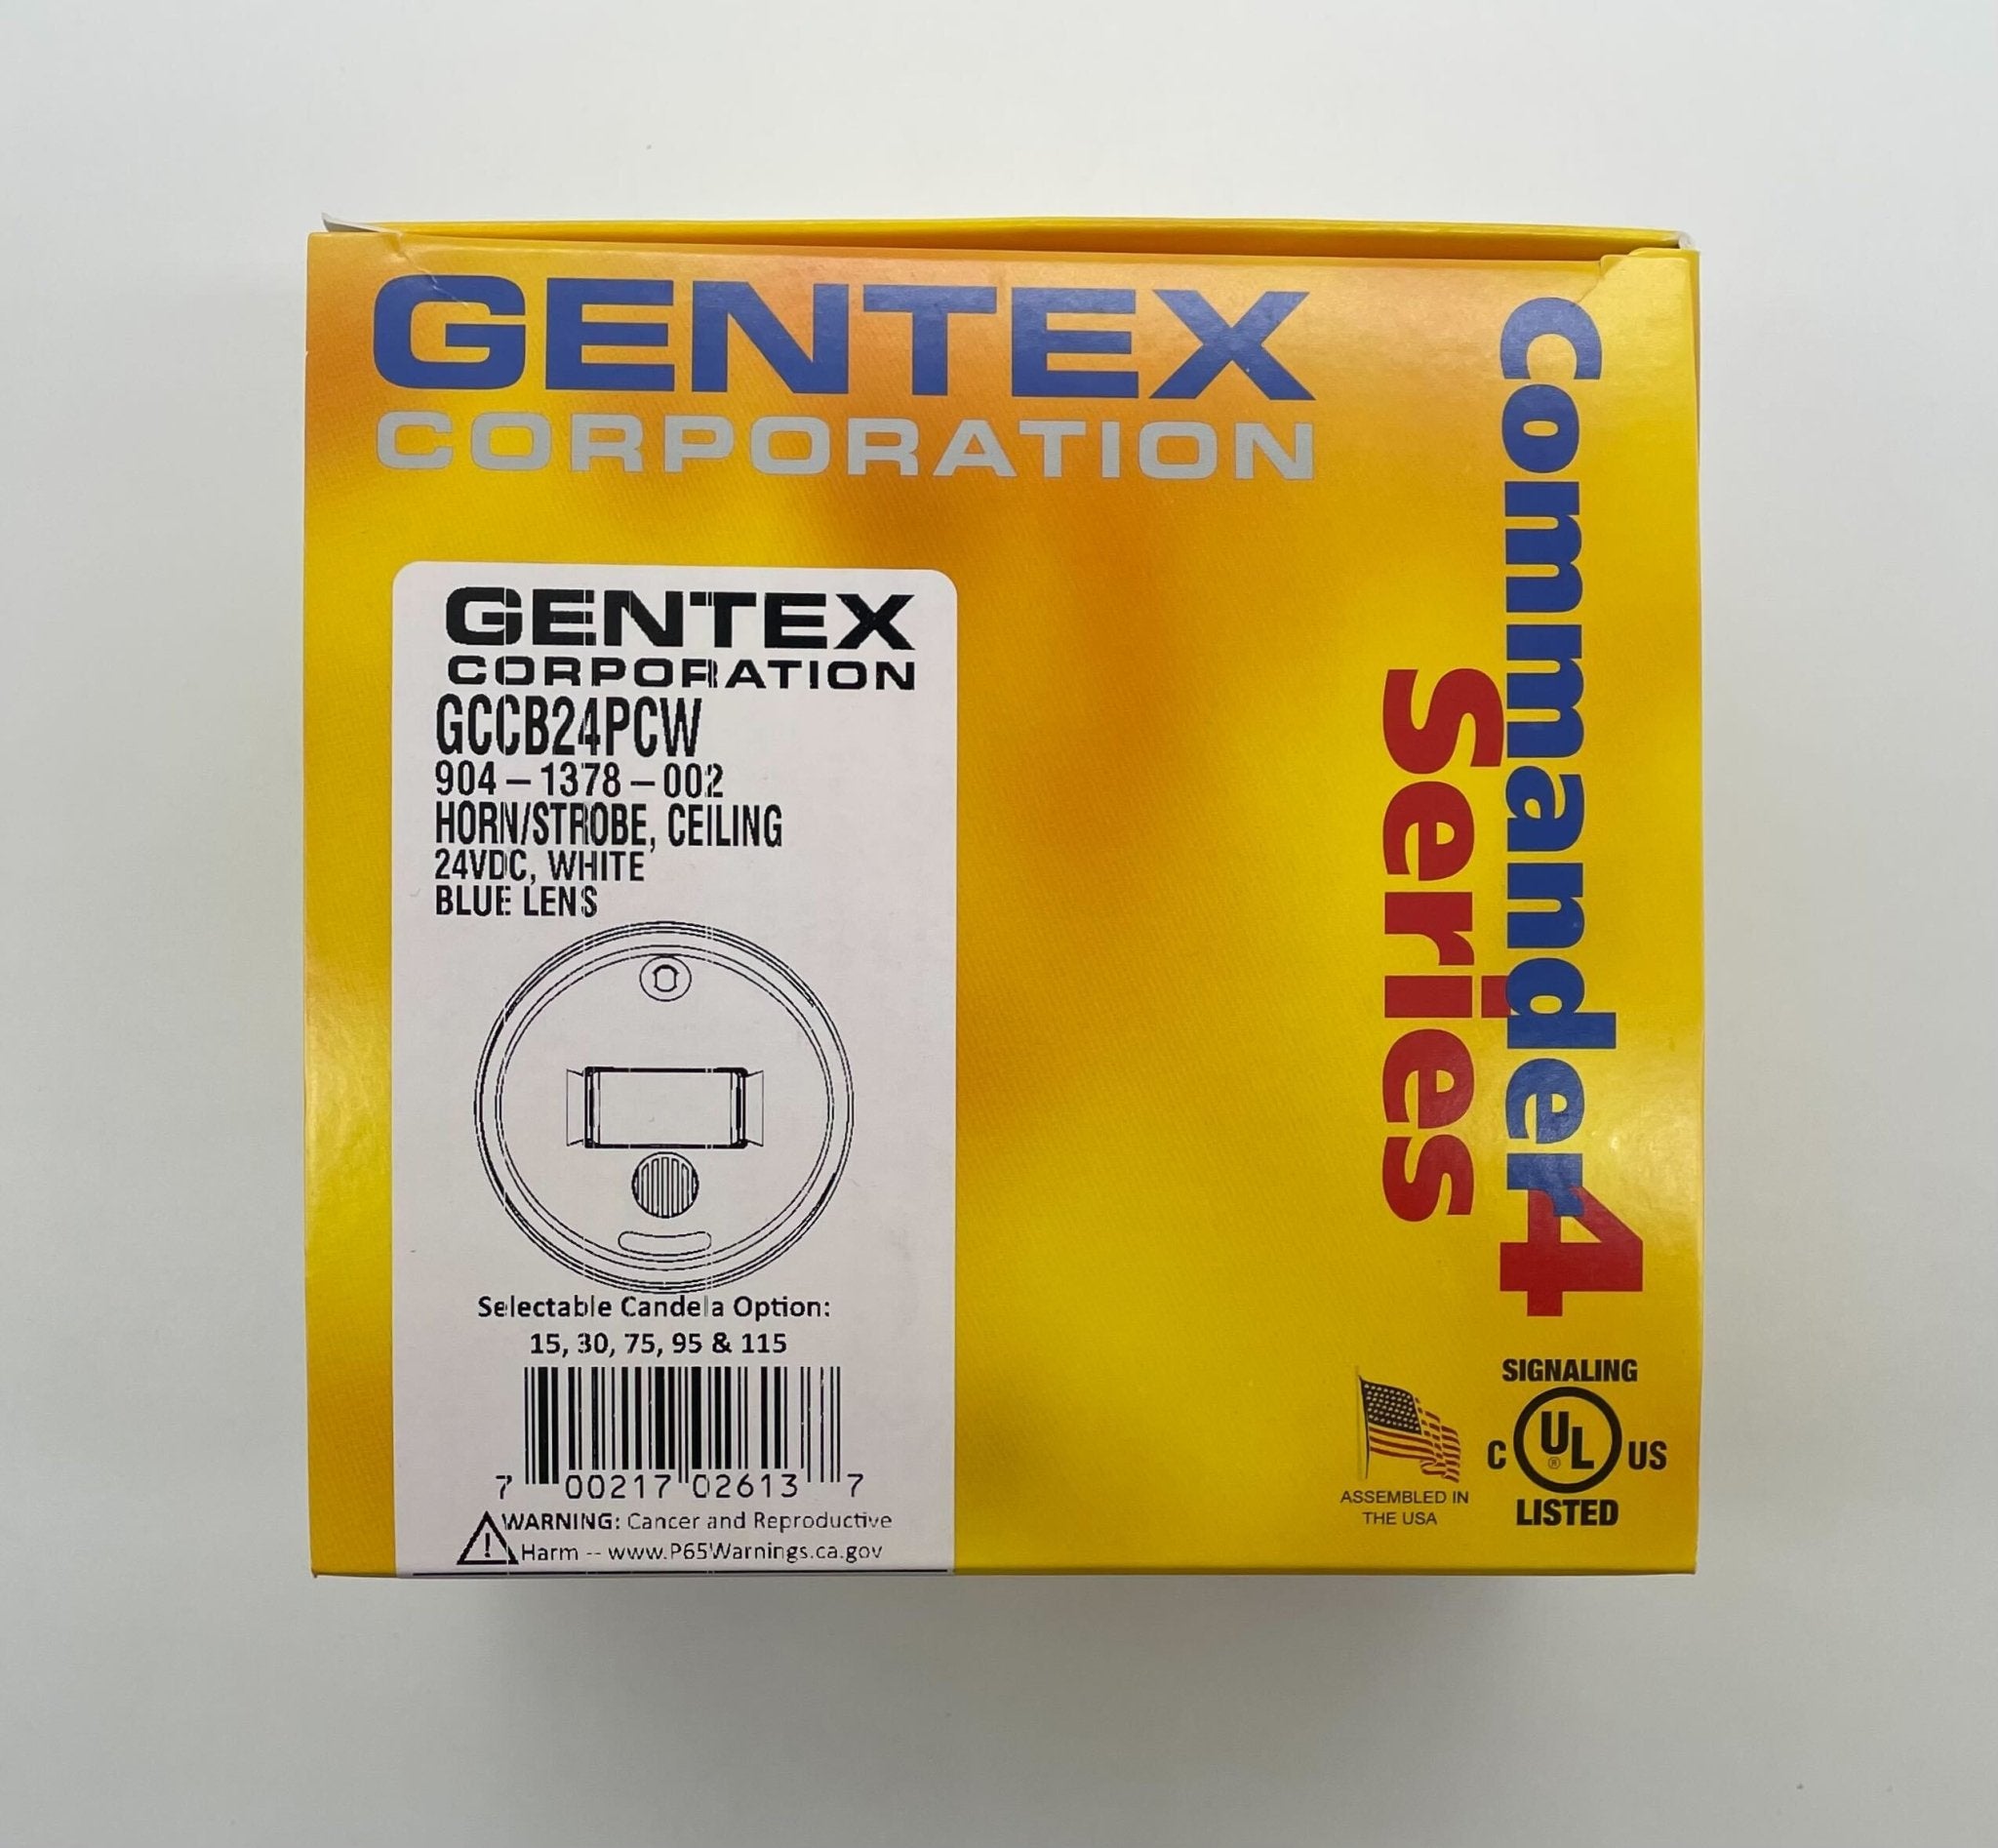 Gentex GCCB24PCW - The Fire Alarm Supplier